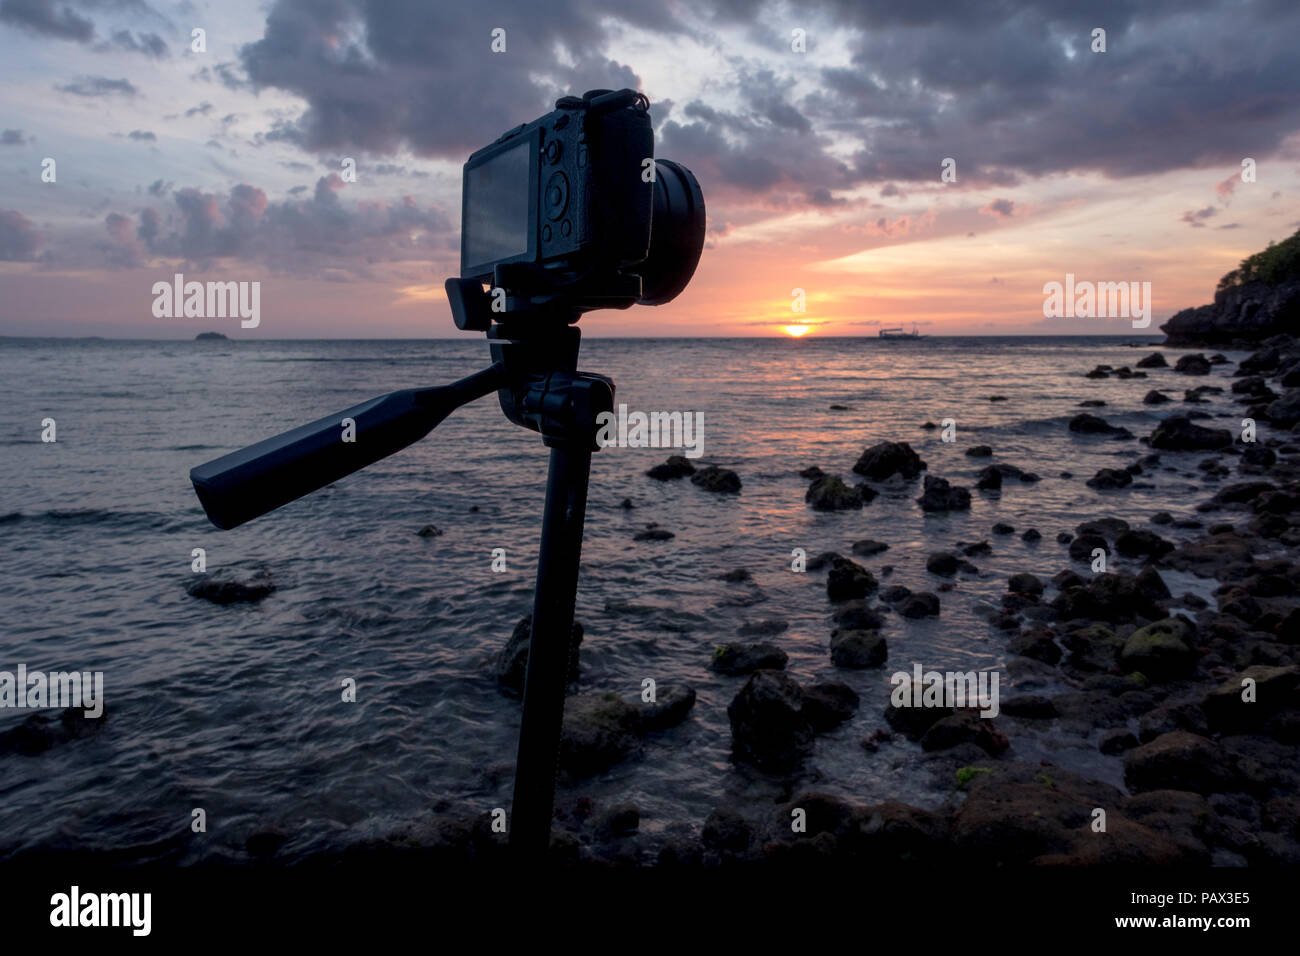 A mirrorless camera and lens on tripod - taking long exposure sunset photos on a beautiful, rocky island beach -Malapascua Cebu - Philippines Stock Photo